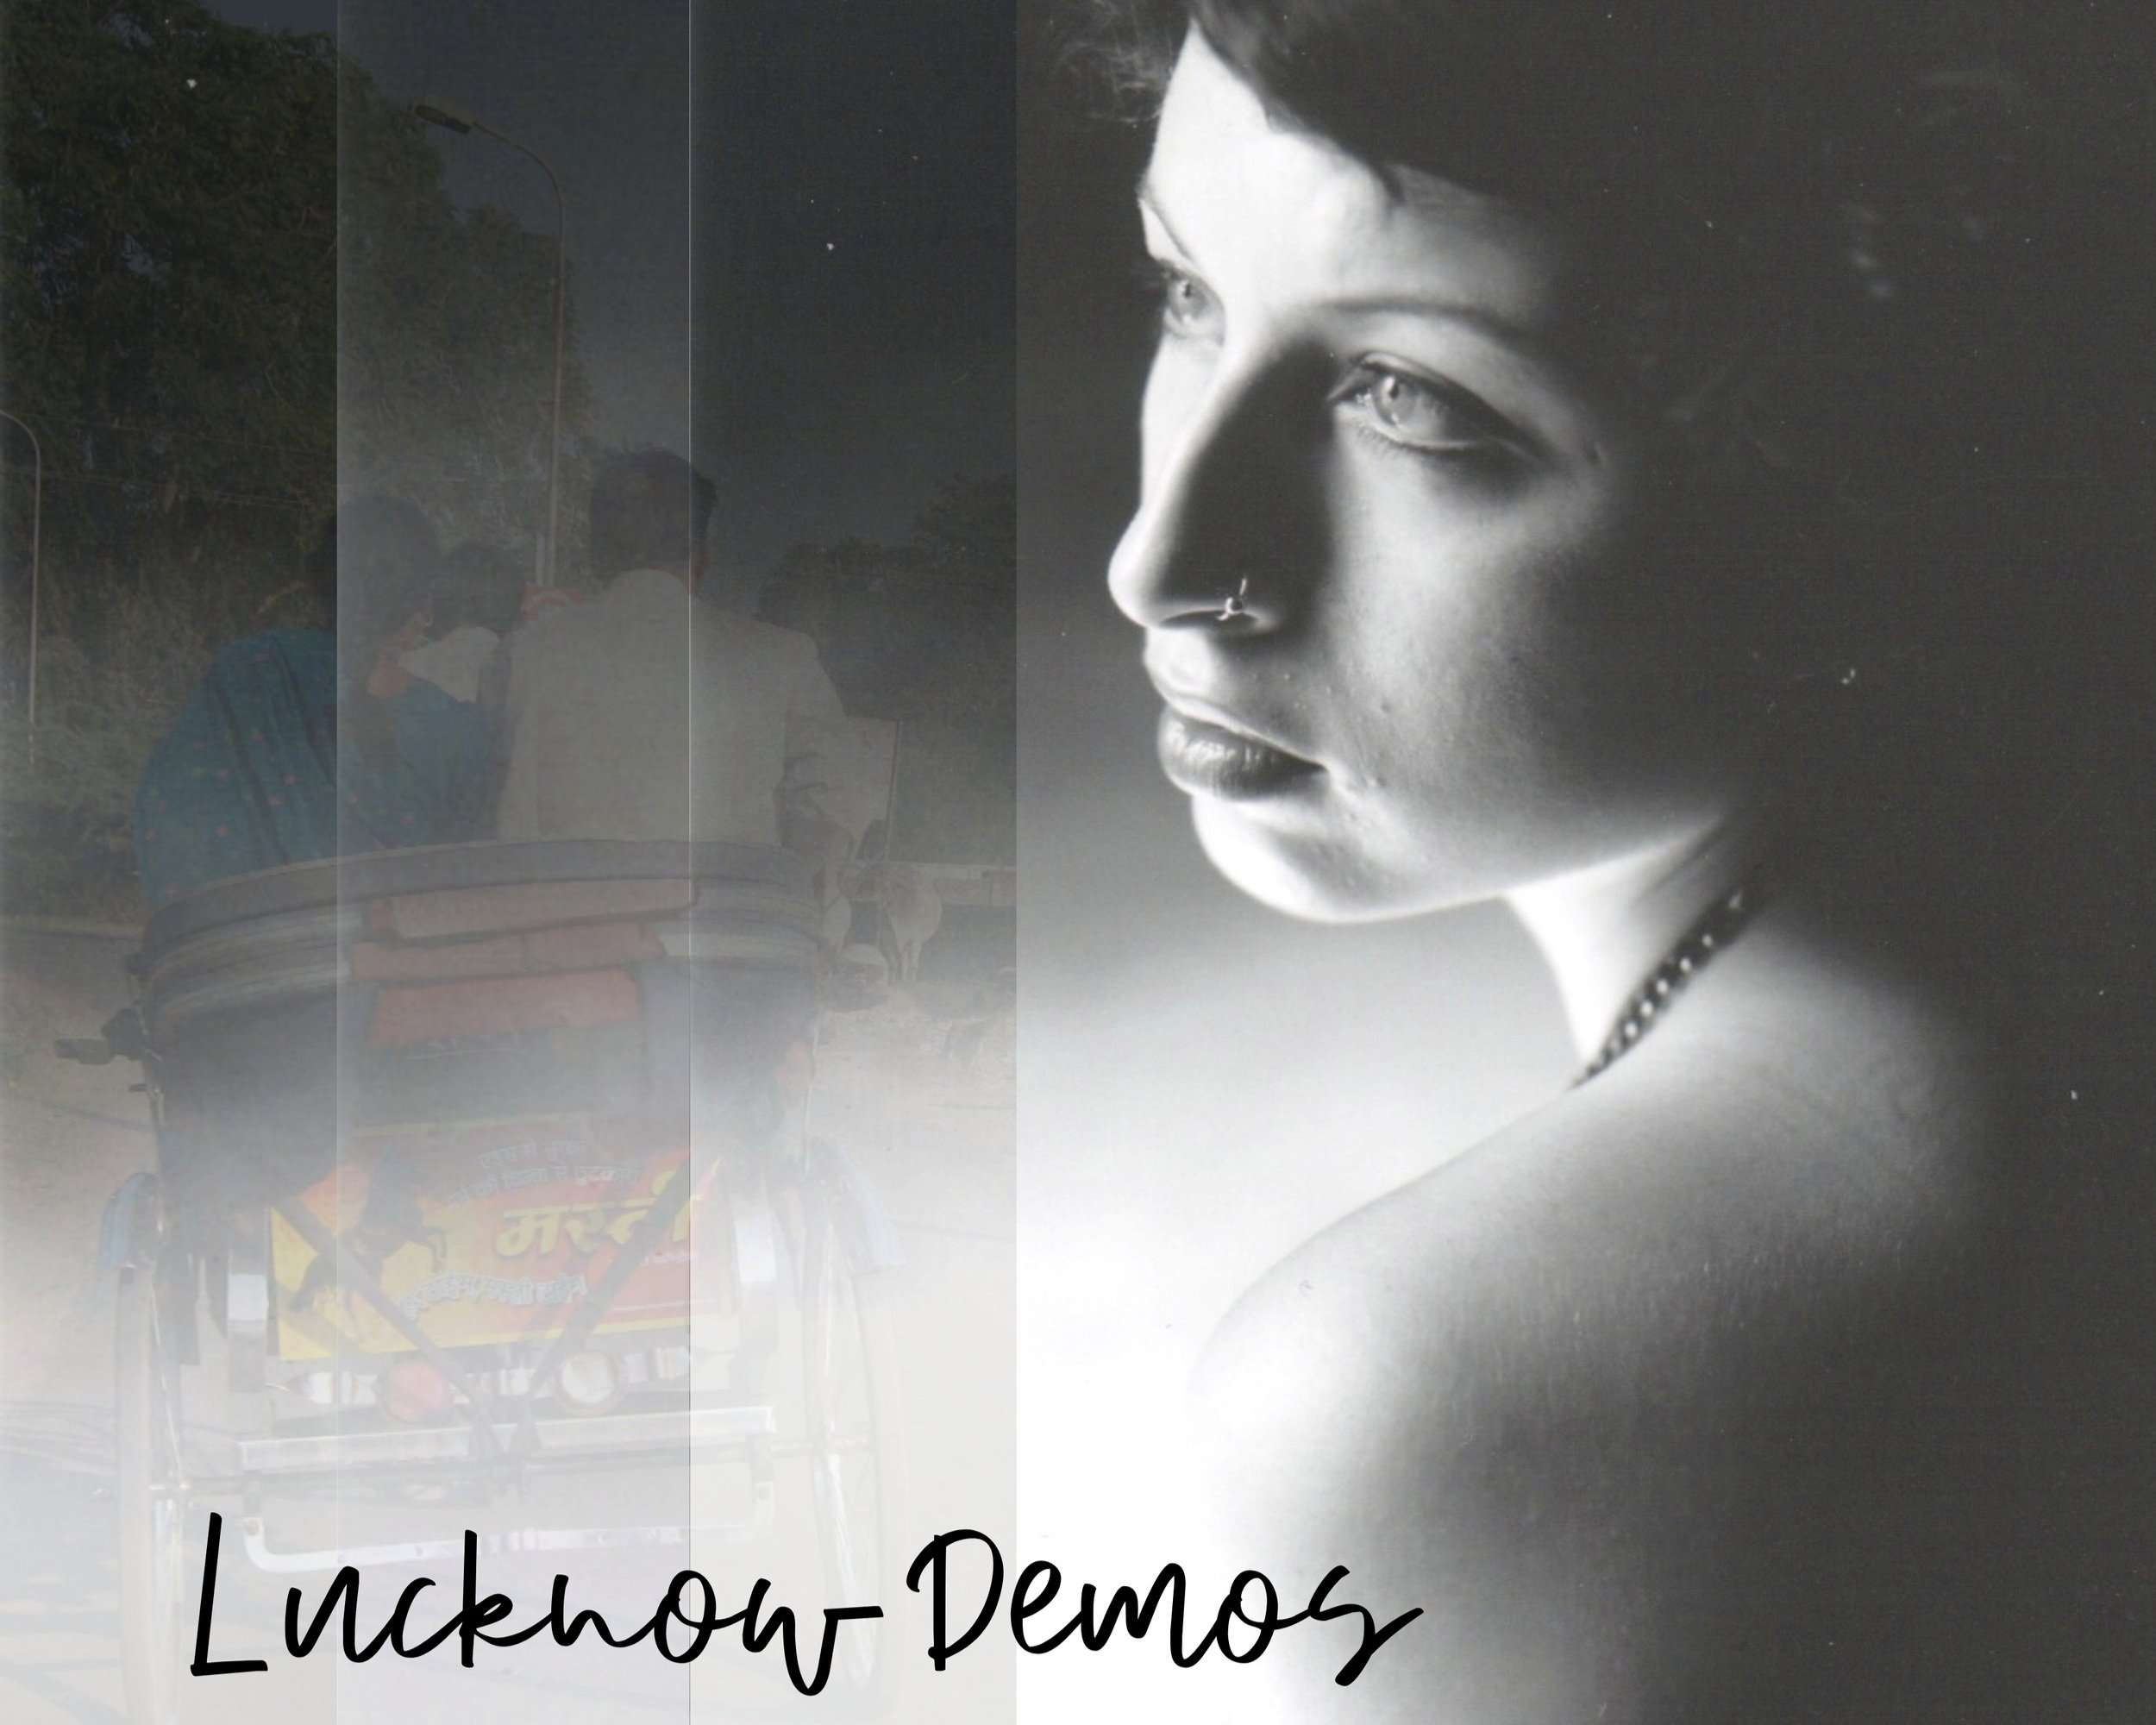 the lucknow demos (Copy)